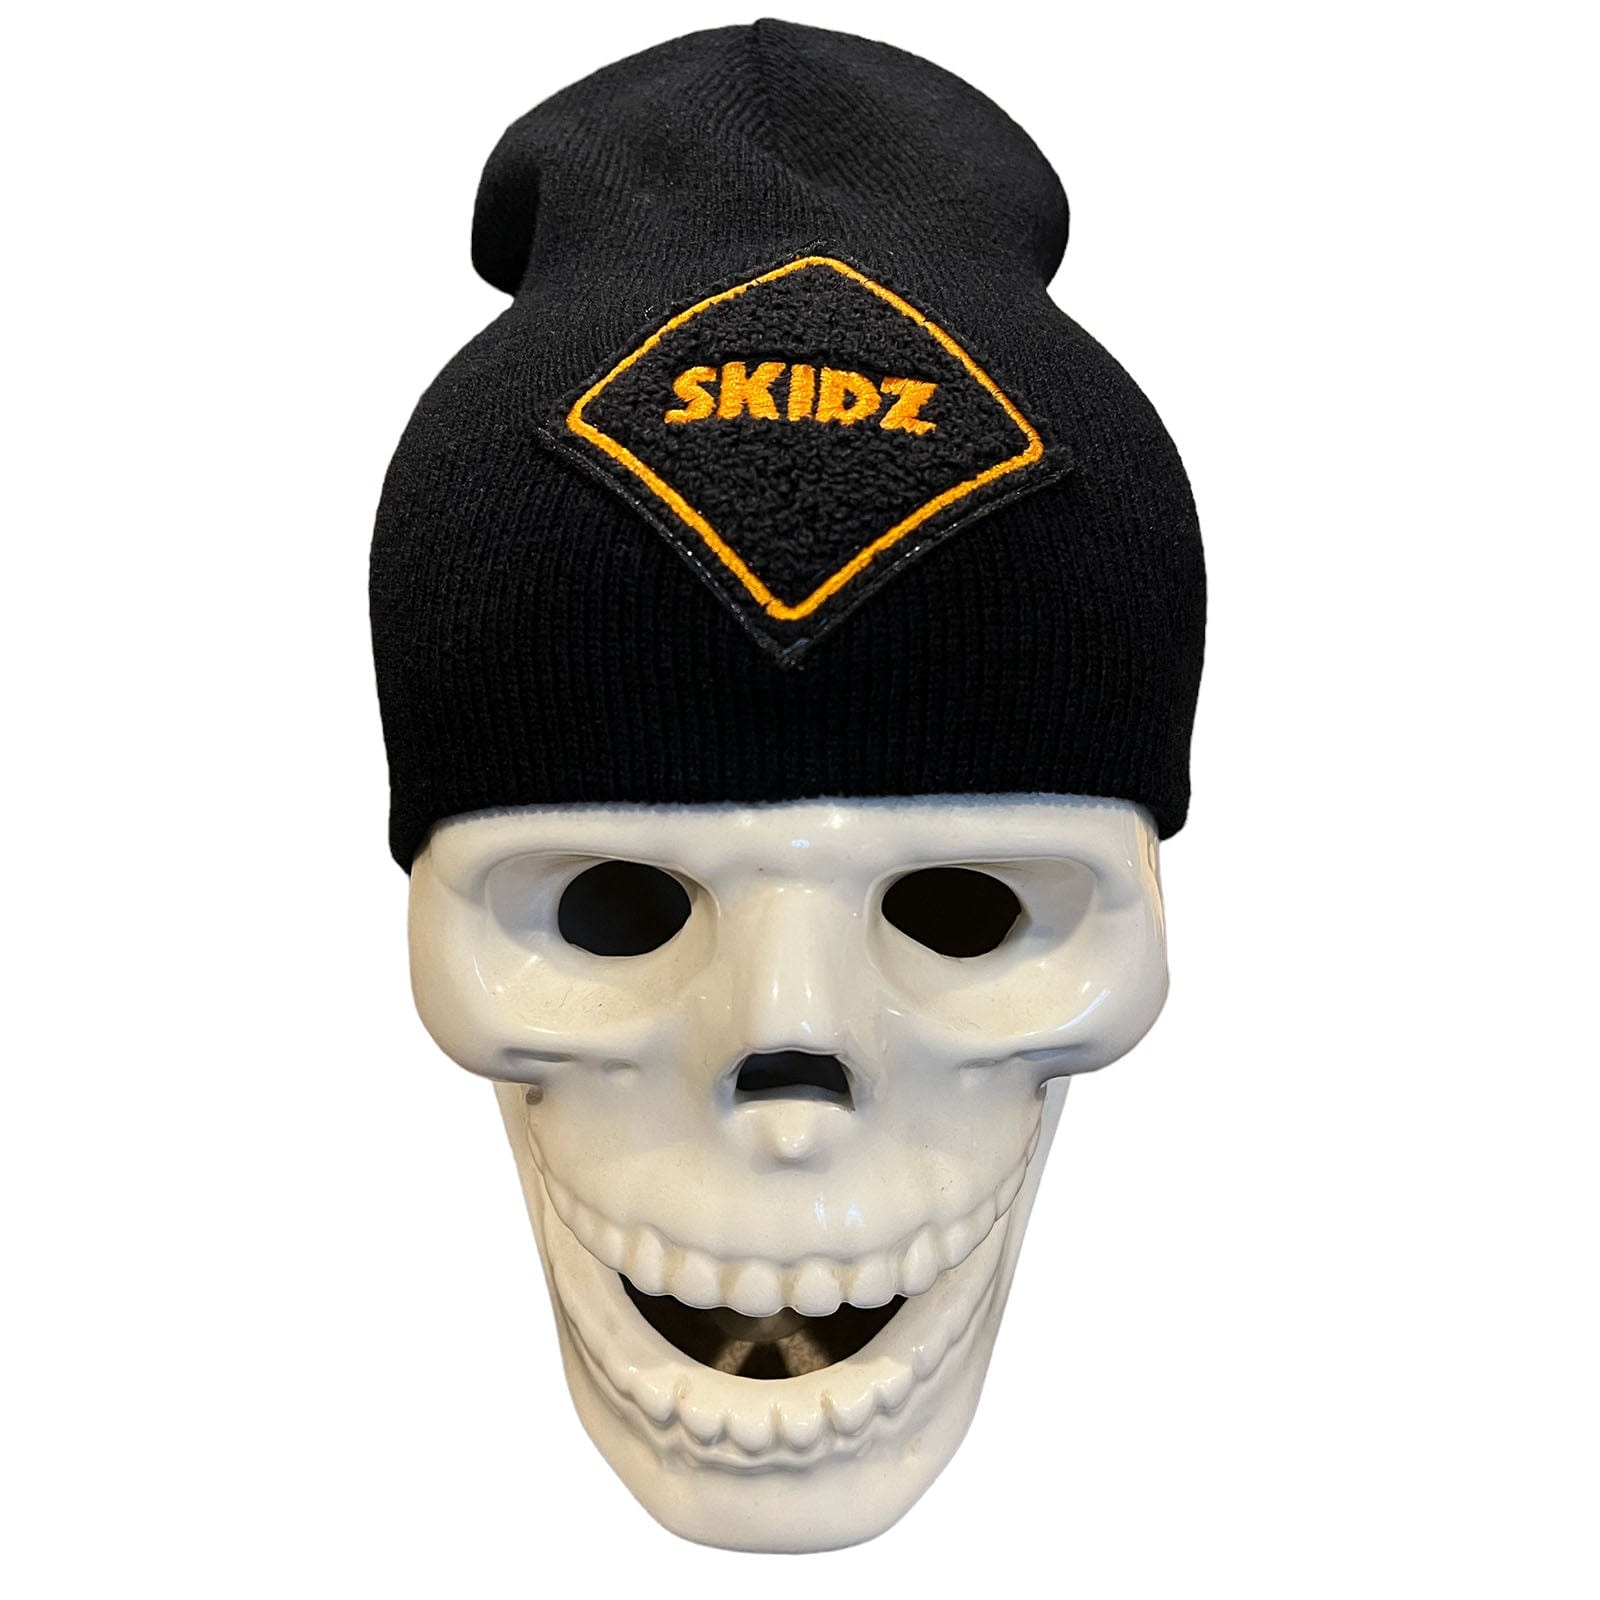 Skidz Fun Stuff Knit Black Beanie Hat - SKIDZ Logo